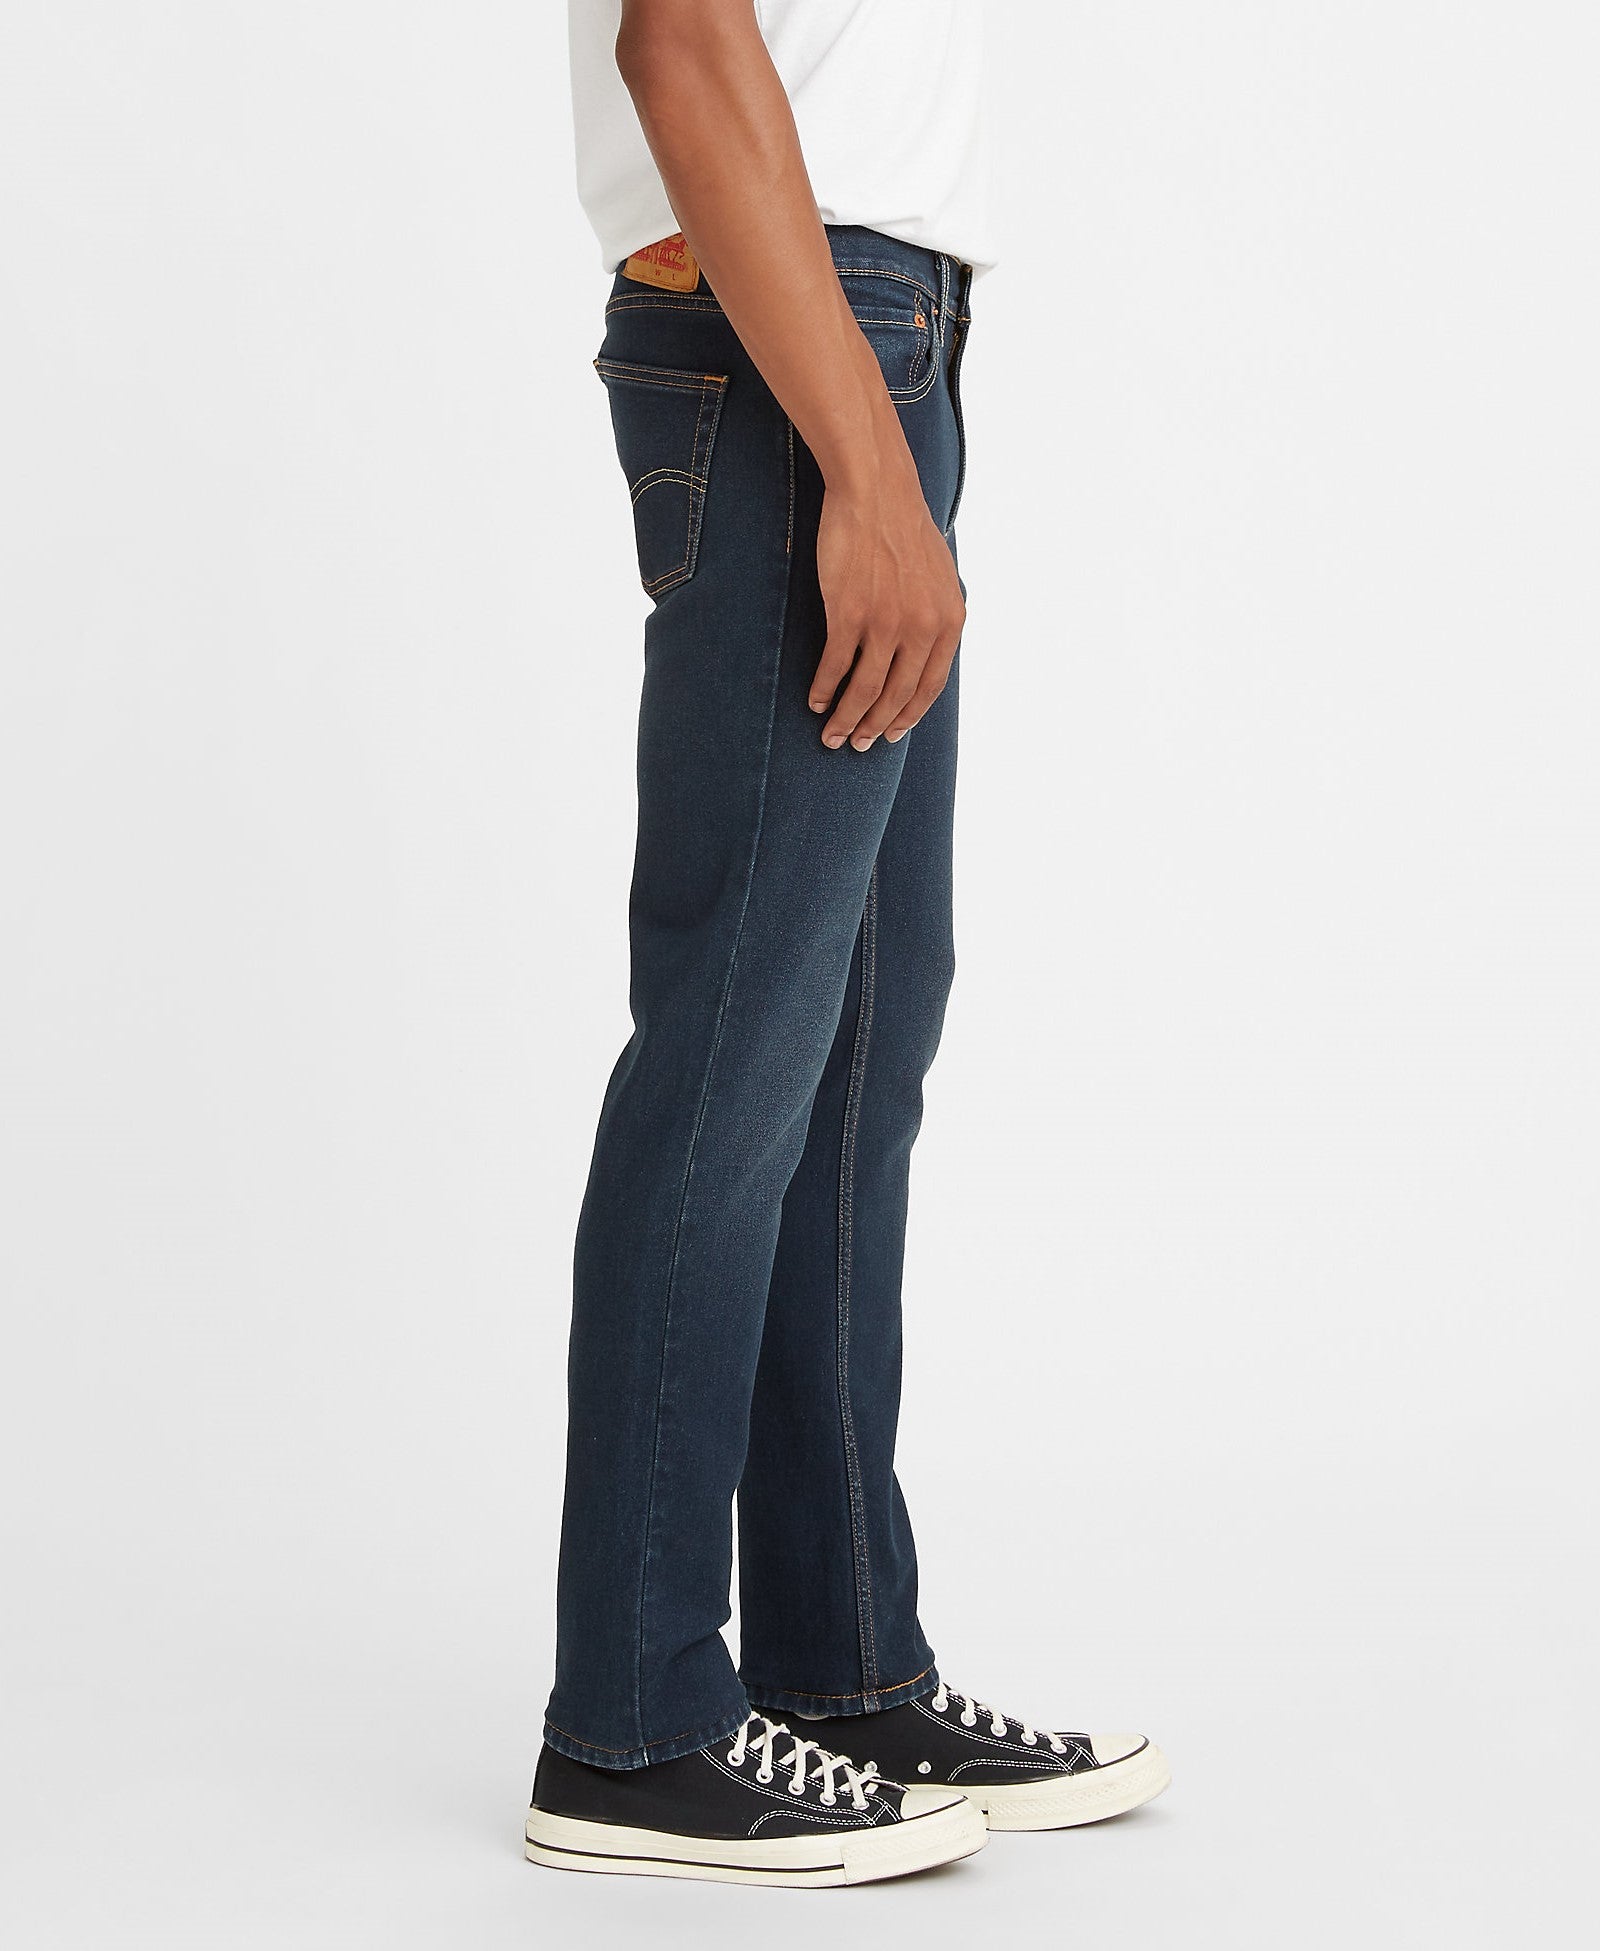 pantalones-jeans-levis-511-slim-spruce-up-p-cabal